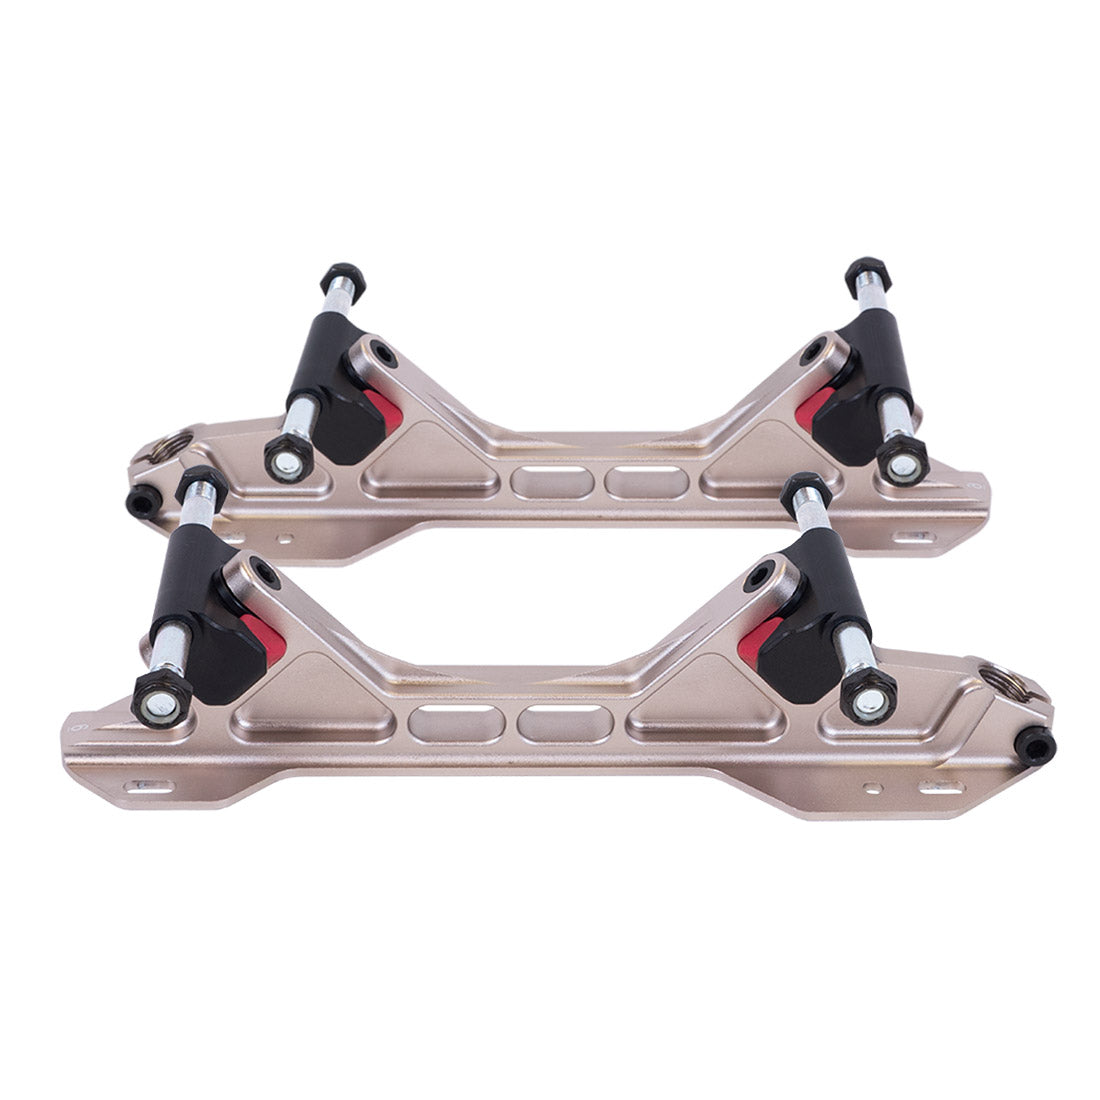 Powerdyne Arius Plate - Platinum Roller Skate Plates